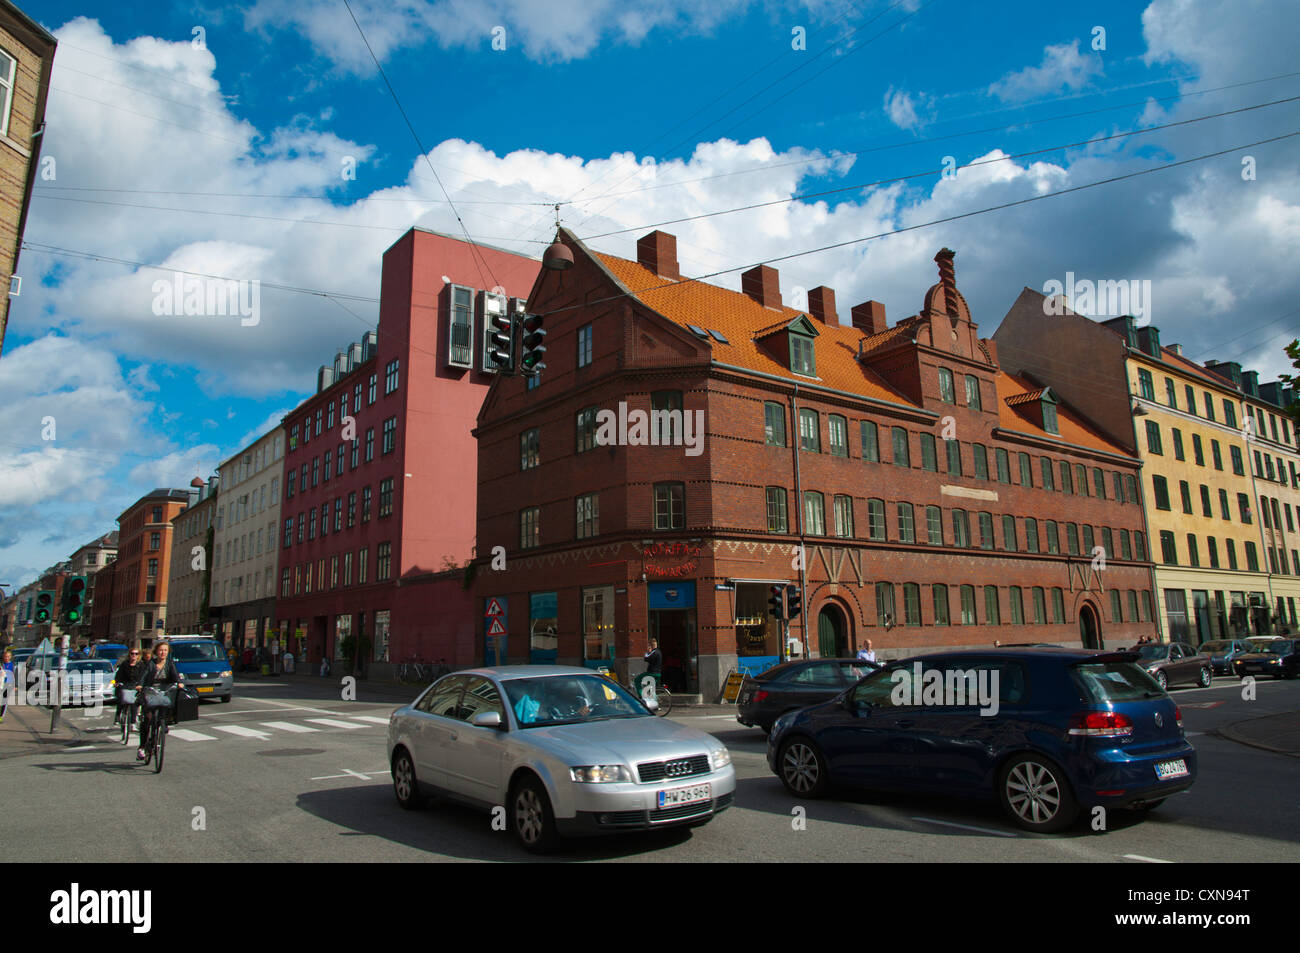 La calle Istedgade central del distrito de Vesterbro Copenhague Dinamarca Europa Foto de stock